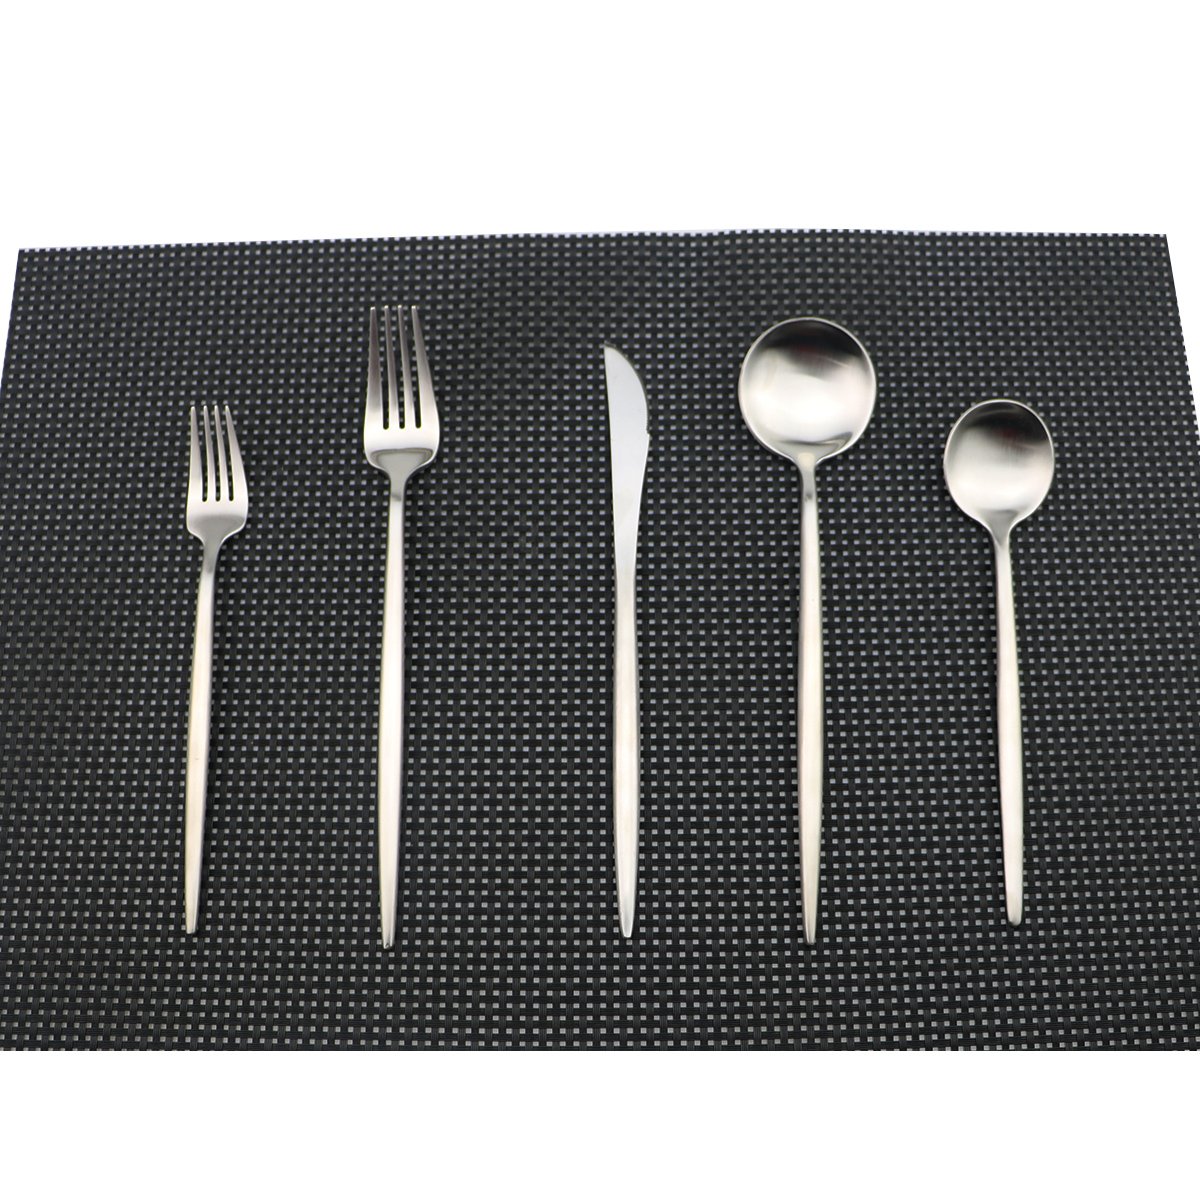 Uniturcky Silverware, 20 Pieces 18/10 Stainless Steel Cutlery Flatware Tableware Dinnerware Utensils Sets for 4